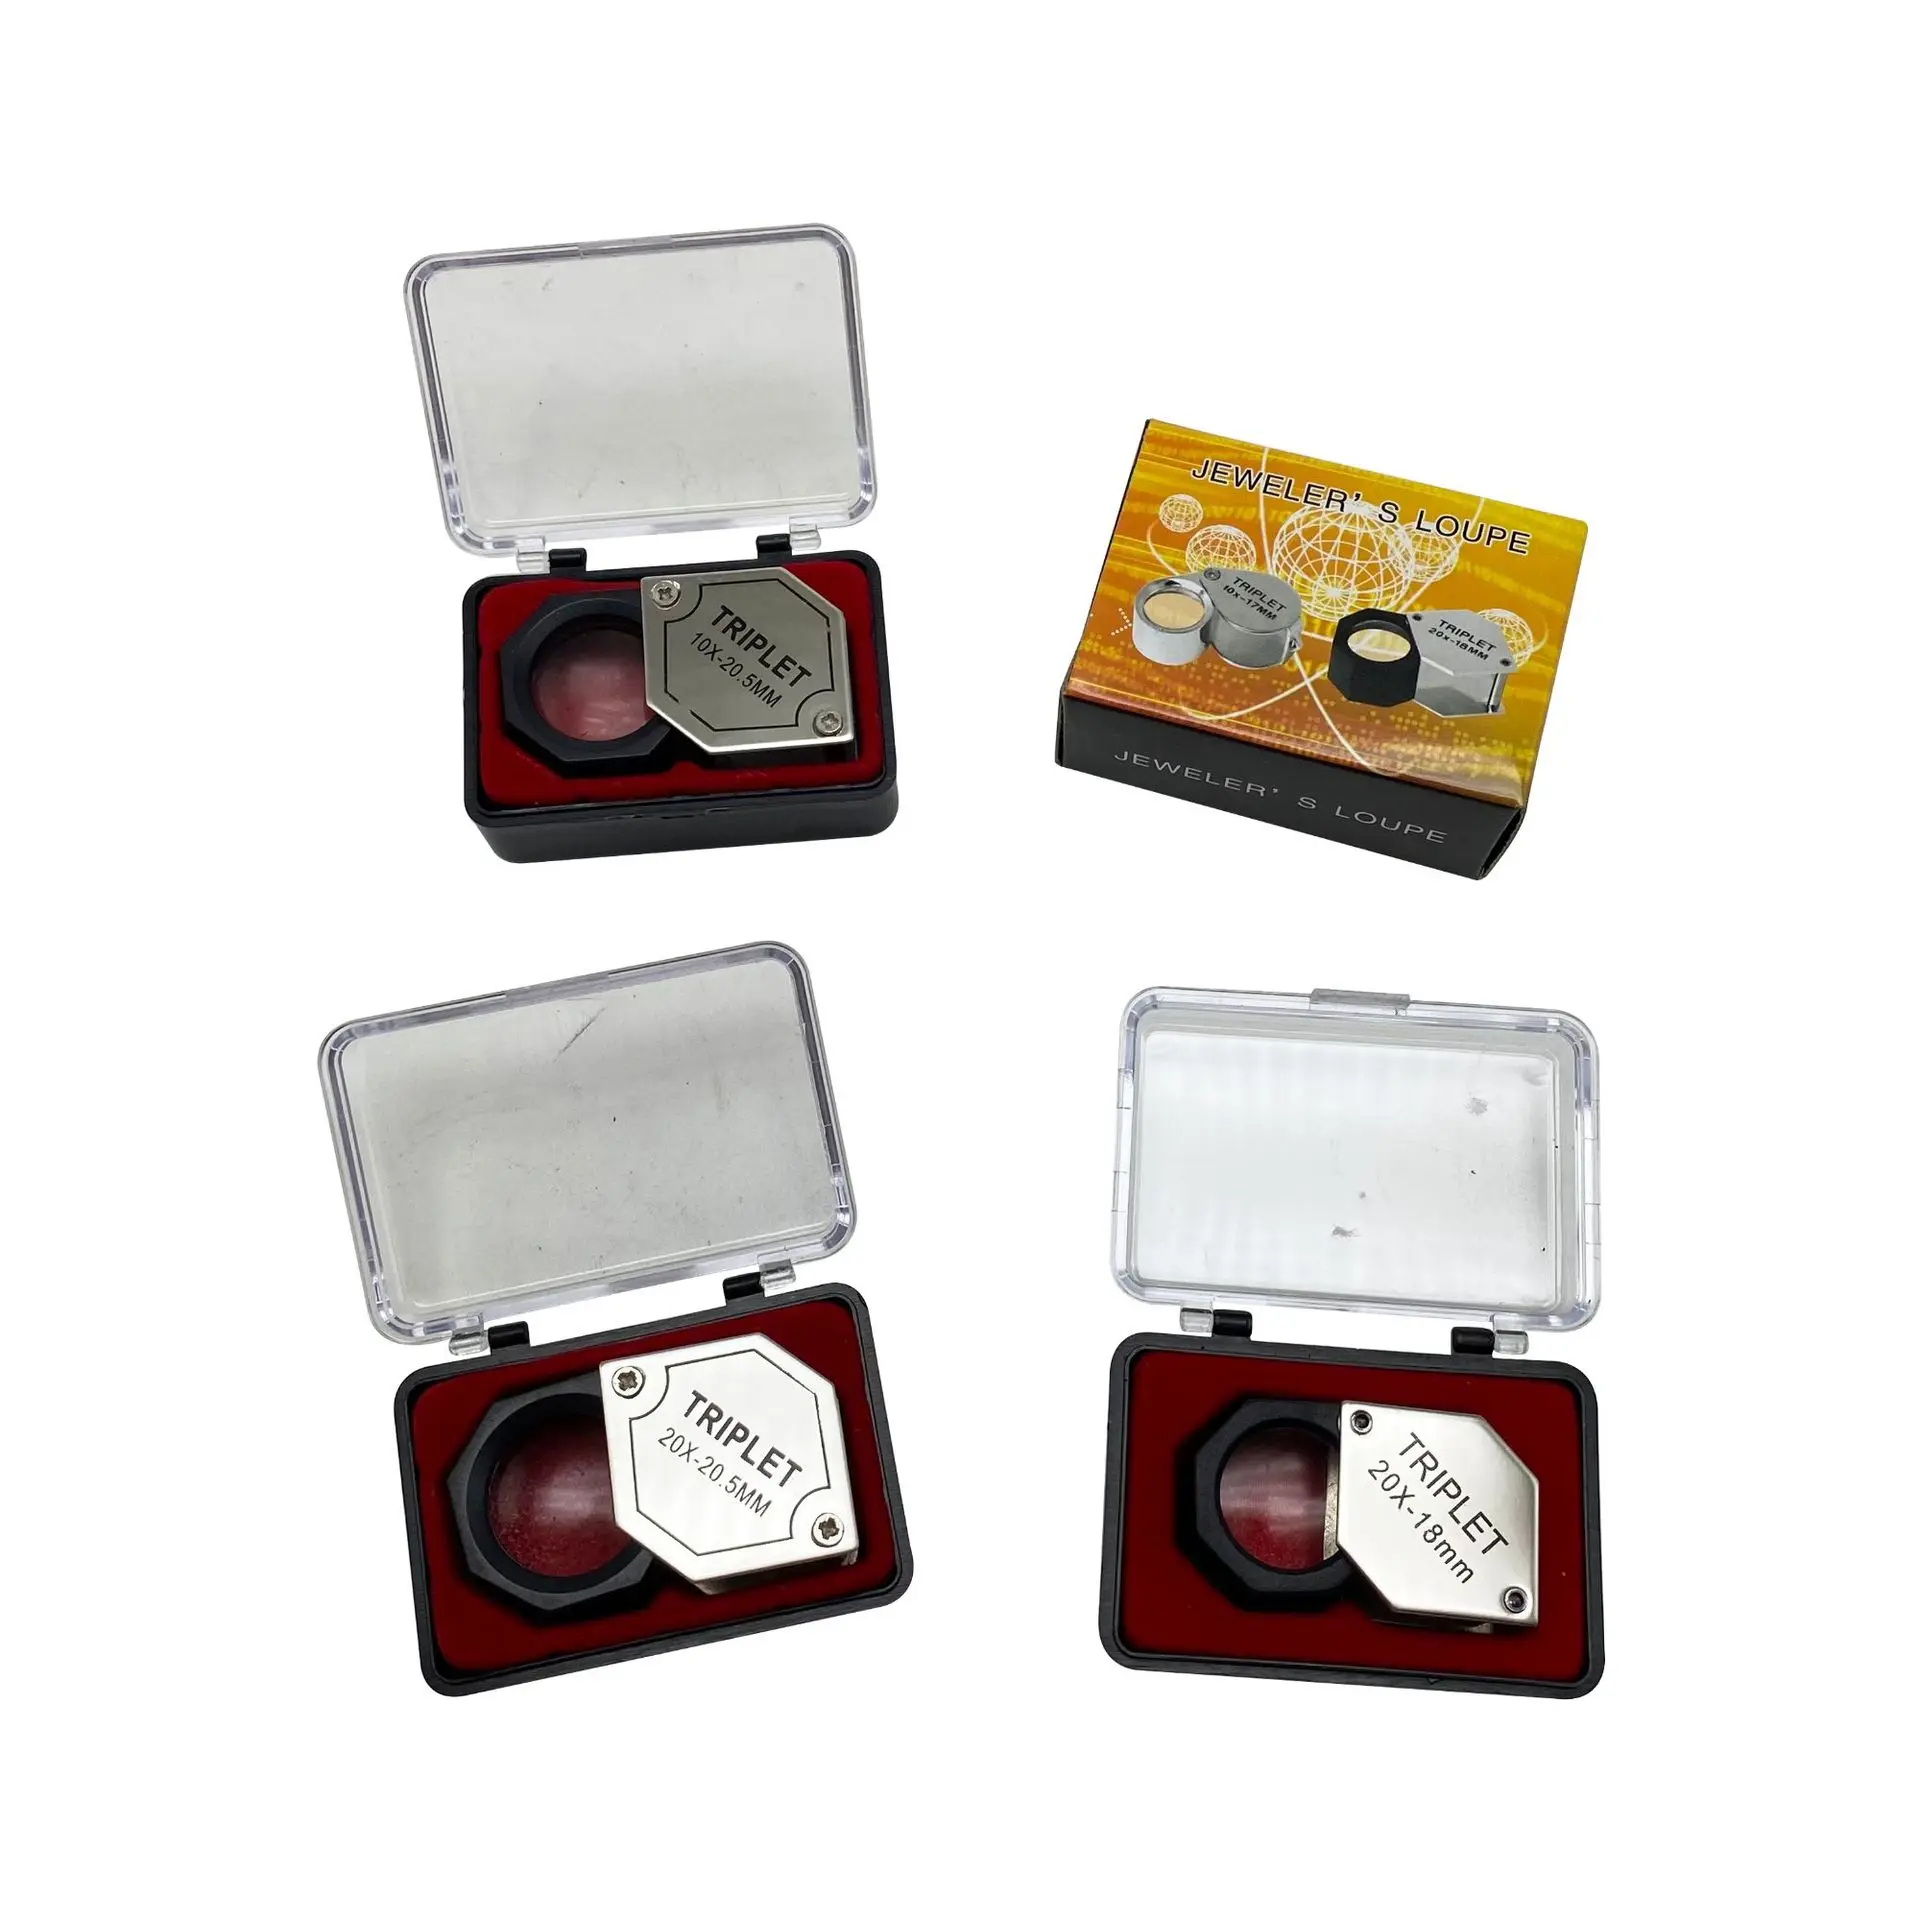 

10X 20x Jewelery Loupe Hexagonal Metal Portable Mini Magnifying Glass Foldable Pocket Magnifier 20.5mm Triplet Optical Lens Kit